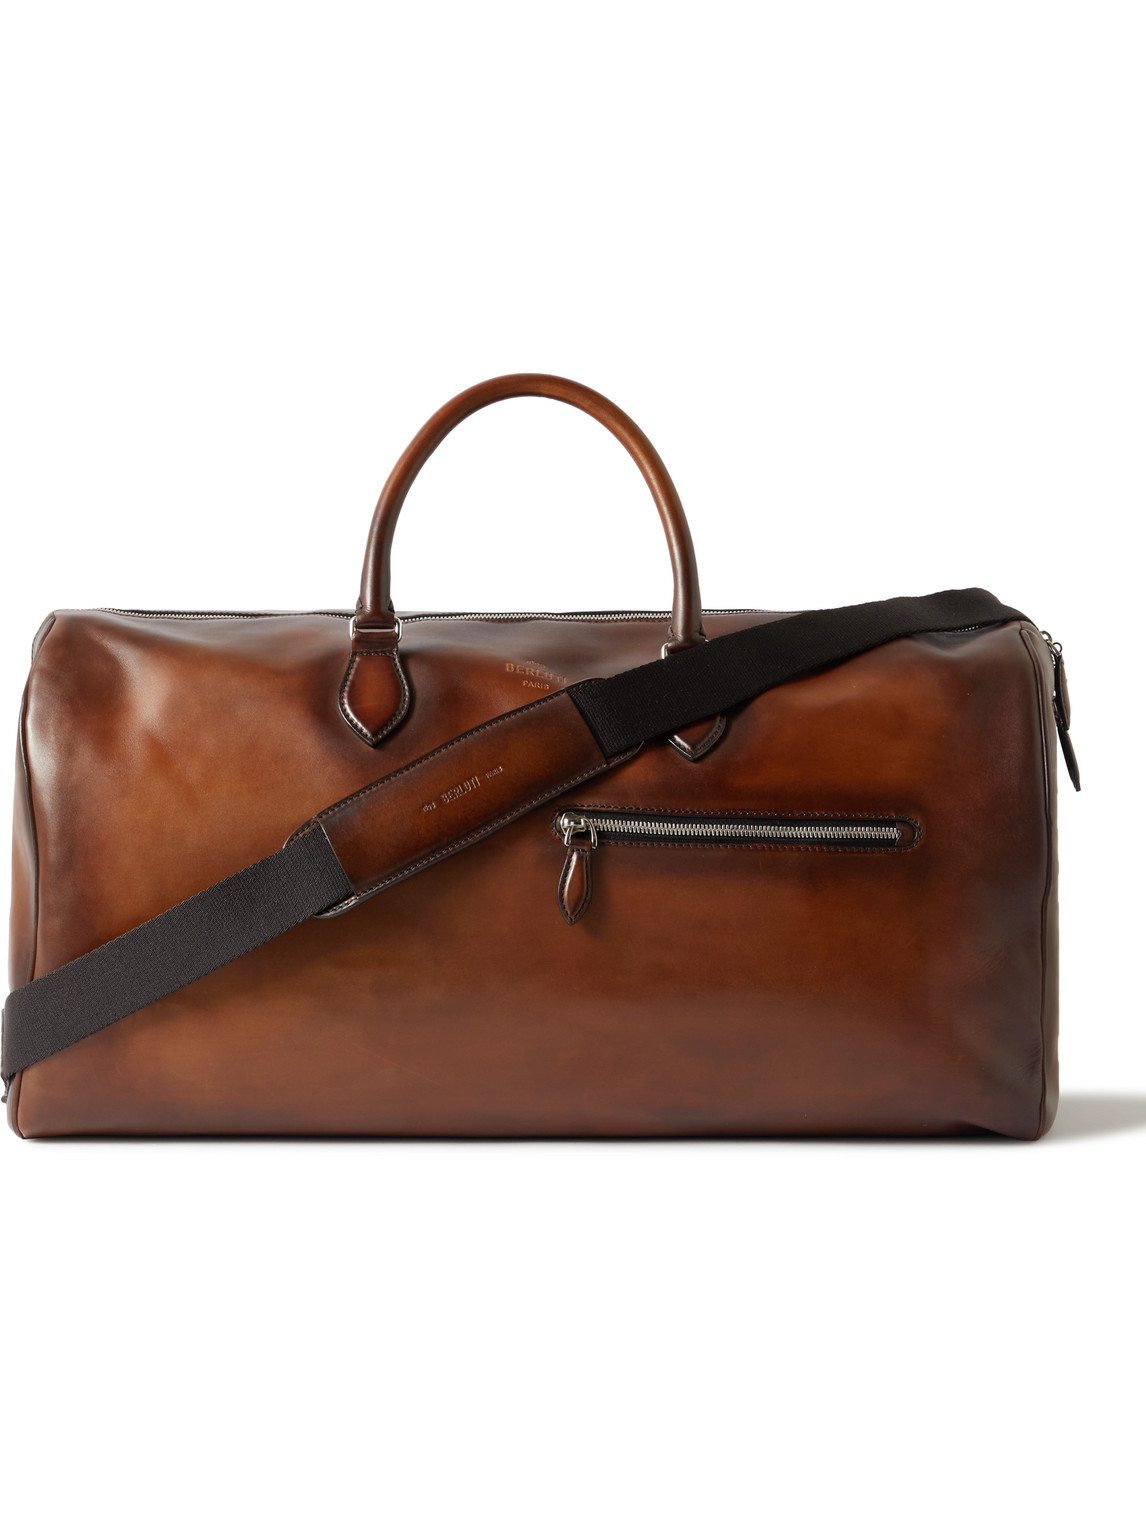 Berluti - Venezia Leather Duffle Bag - Men - Brown von Berluti